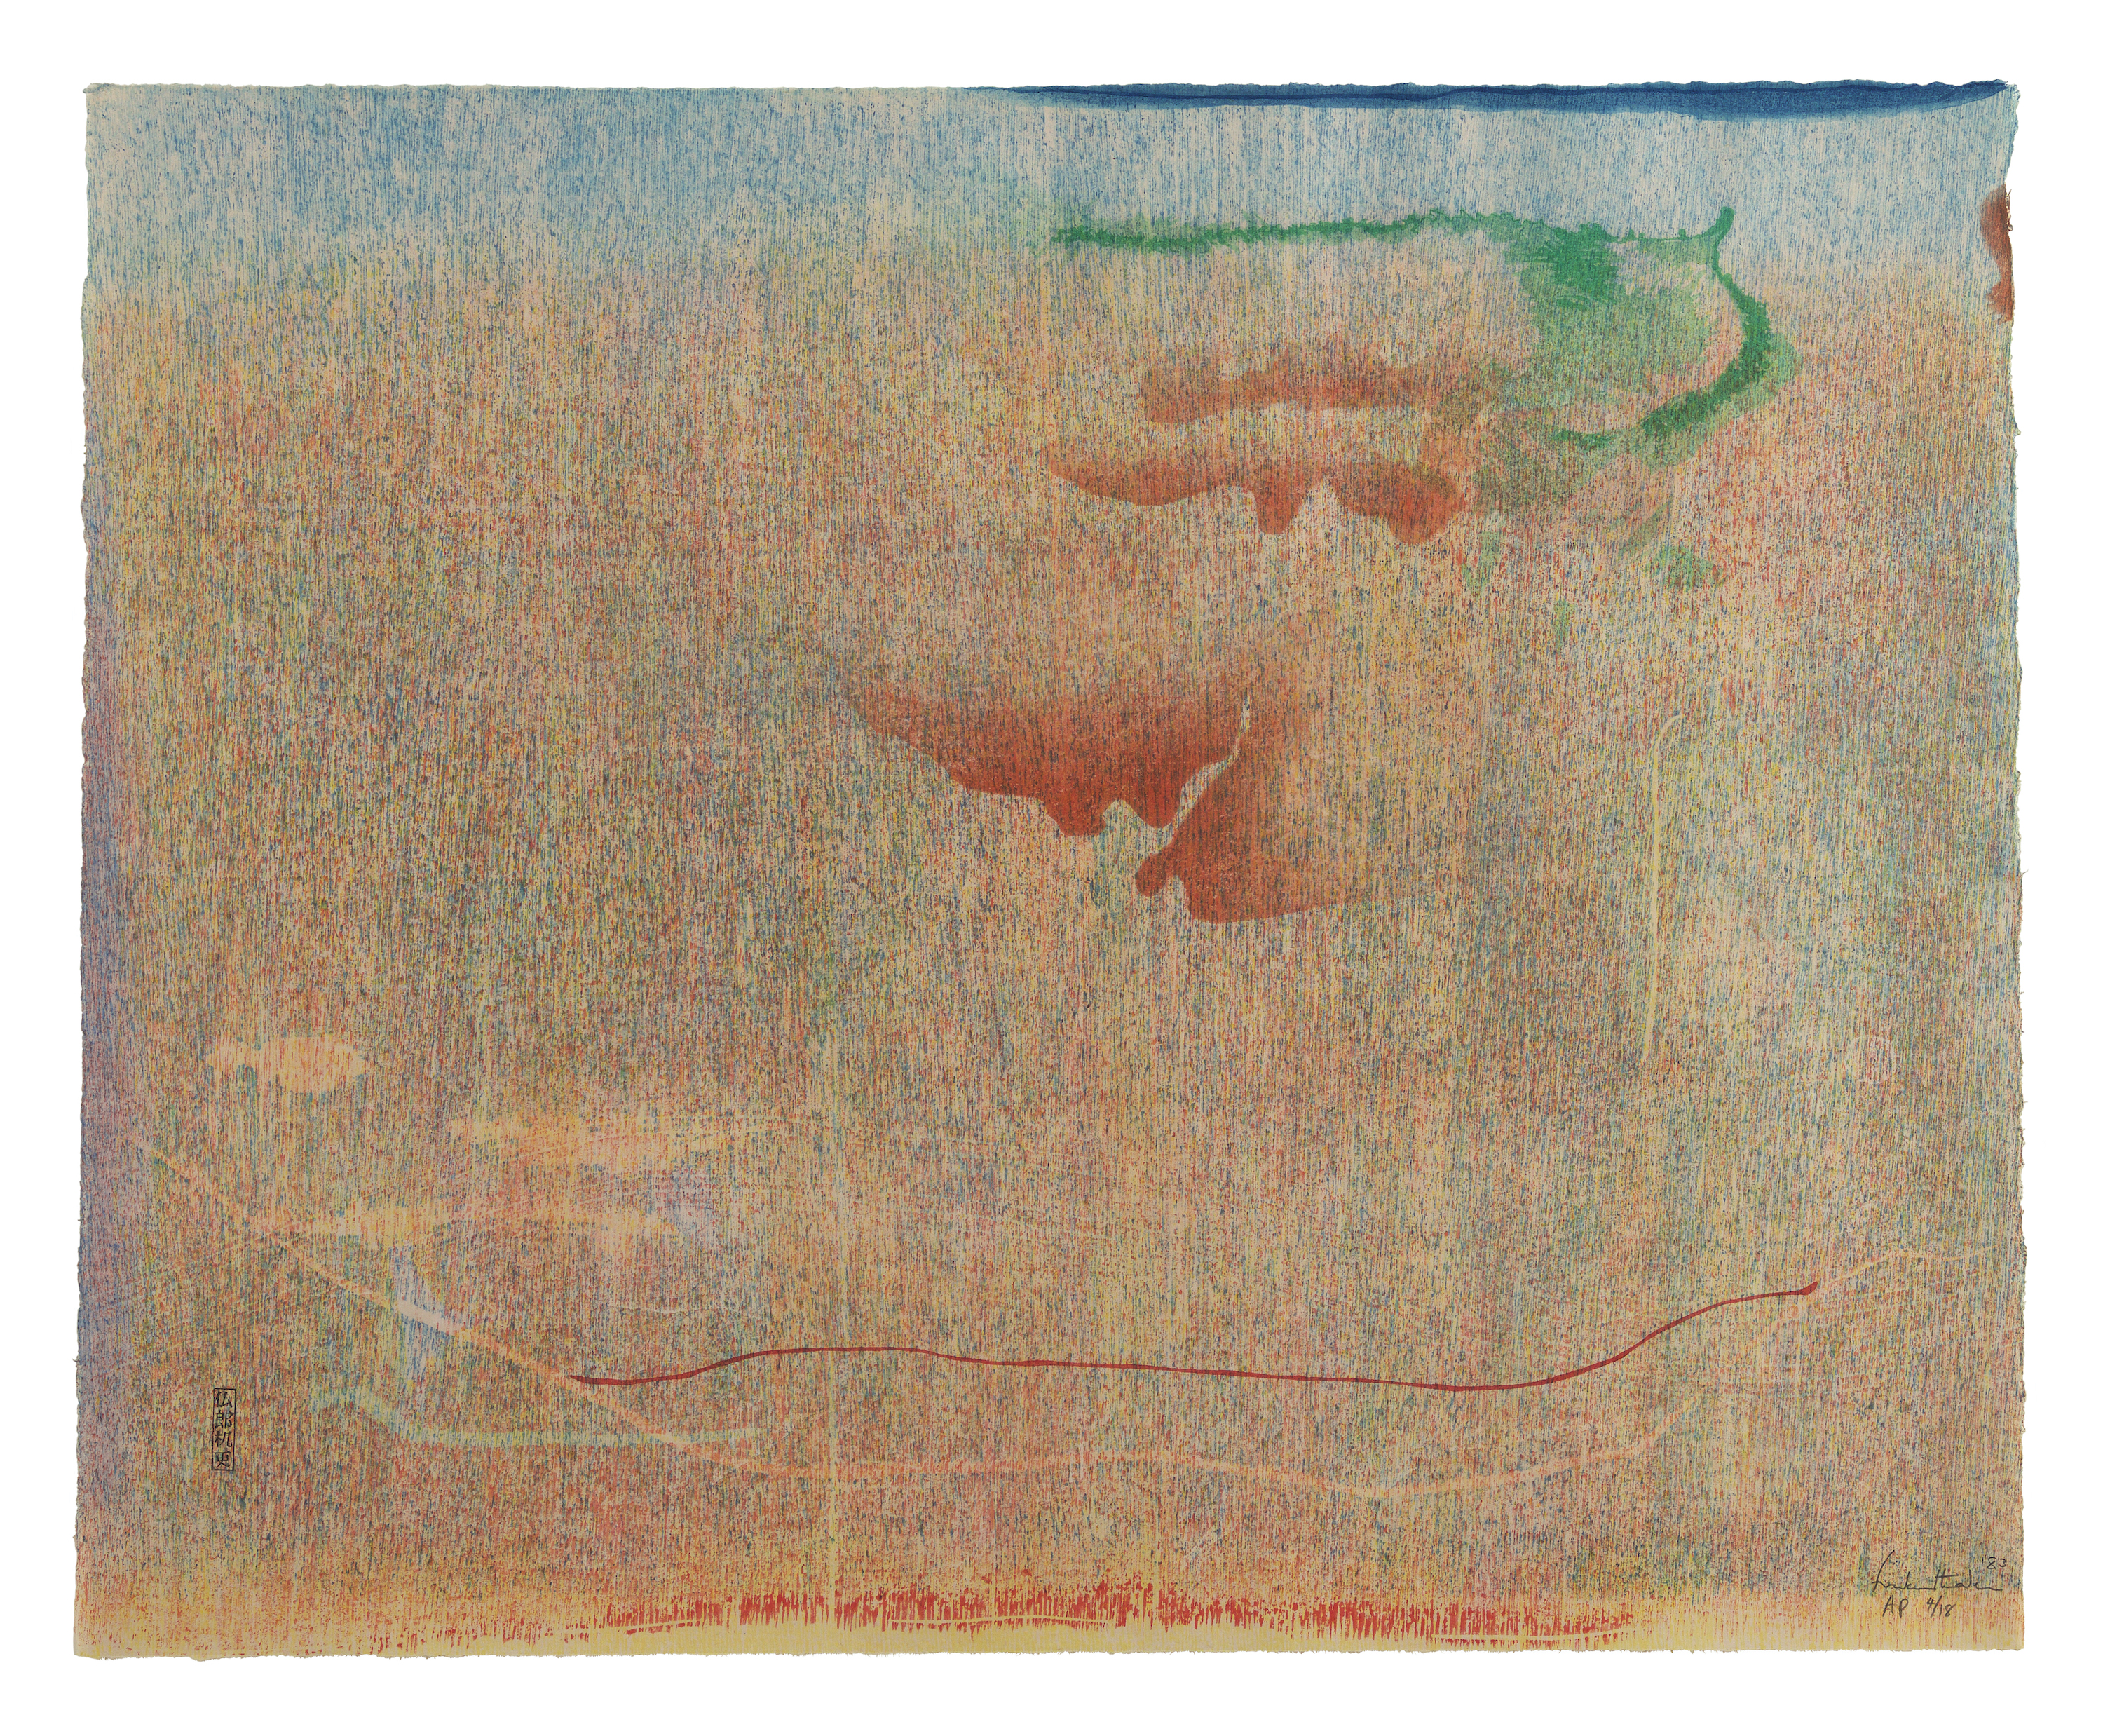 Кедровий пагорб by Helen Frankenthaler - 1983 - 51.4 x 62.9 см 